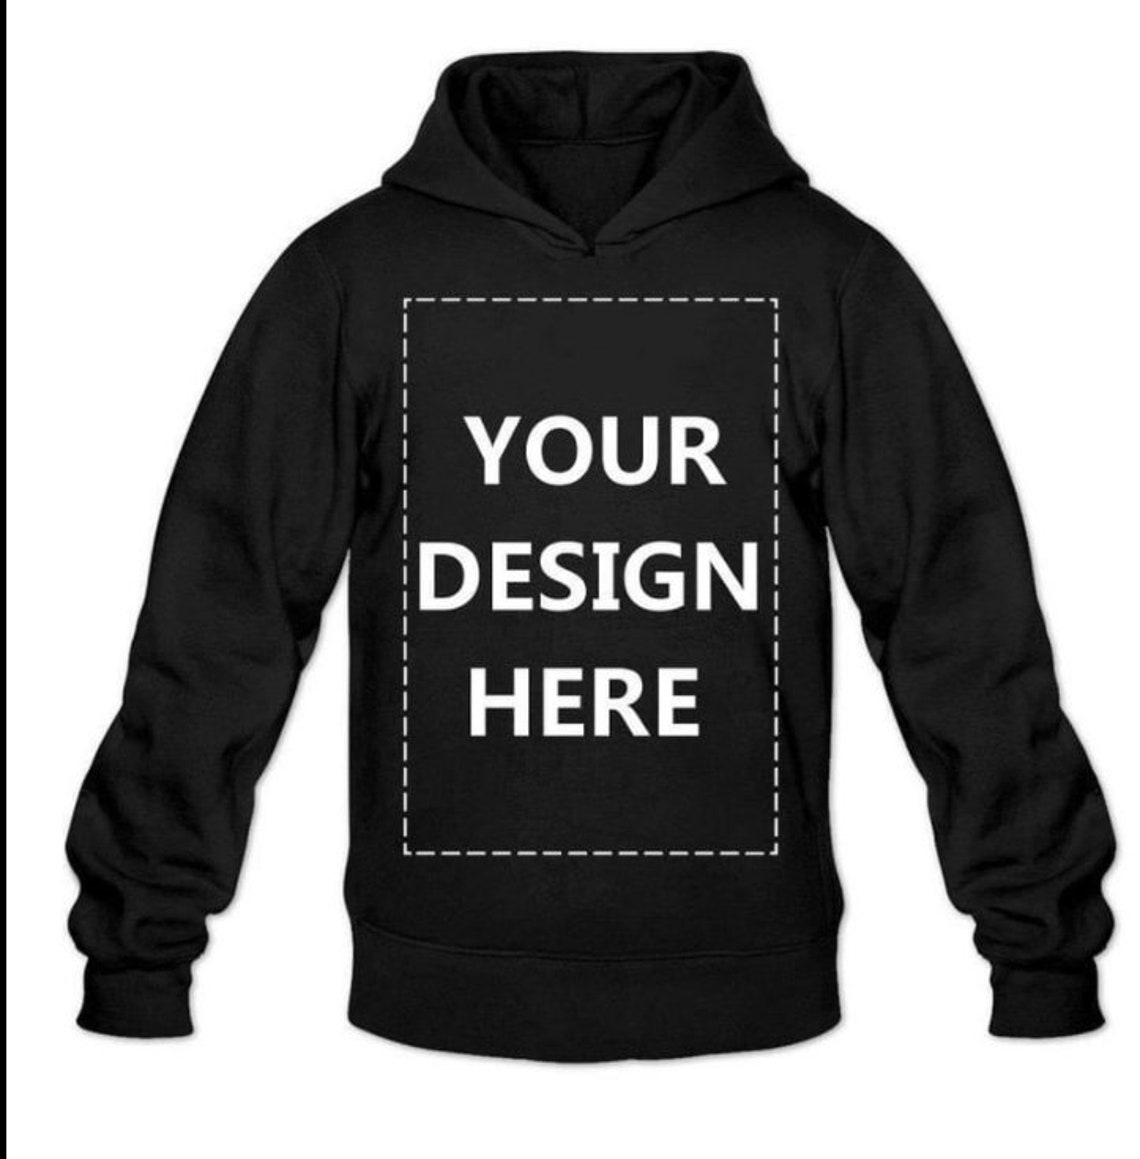 Custom personalised hoodie make your own designs here charity | Etsy